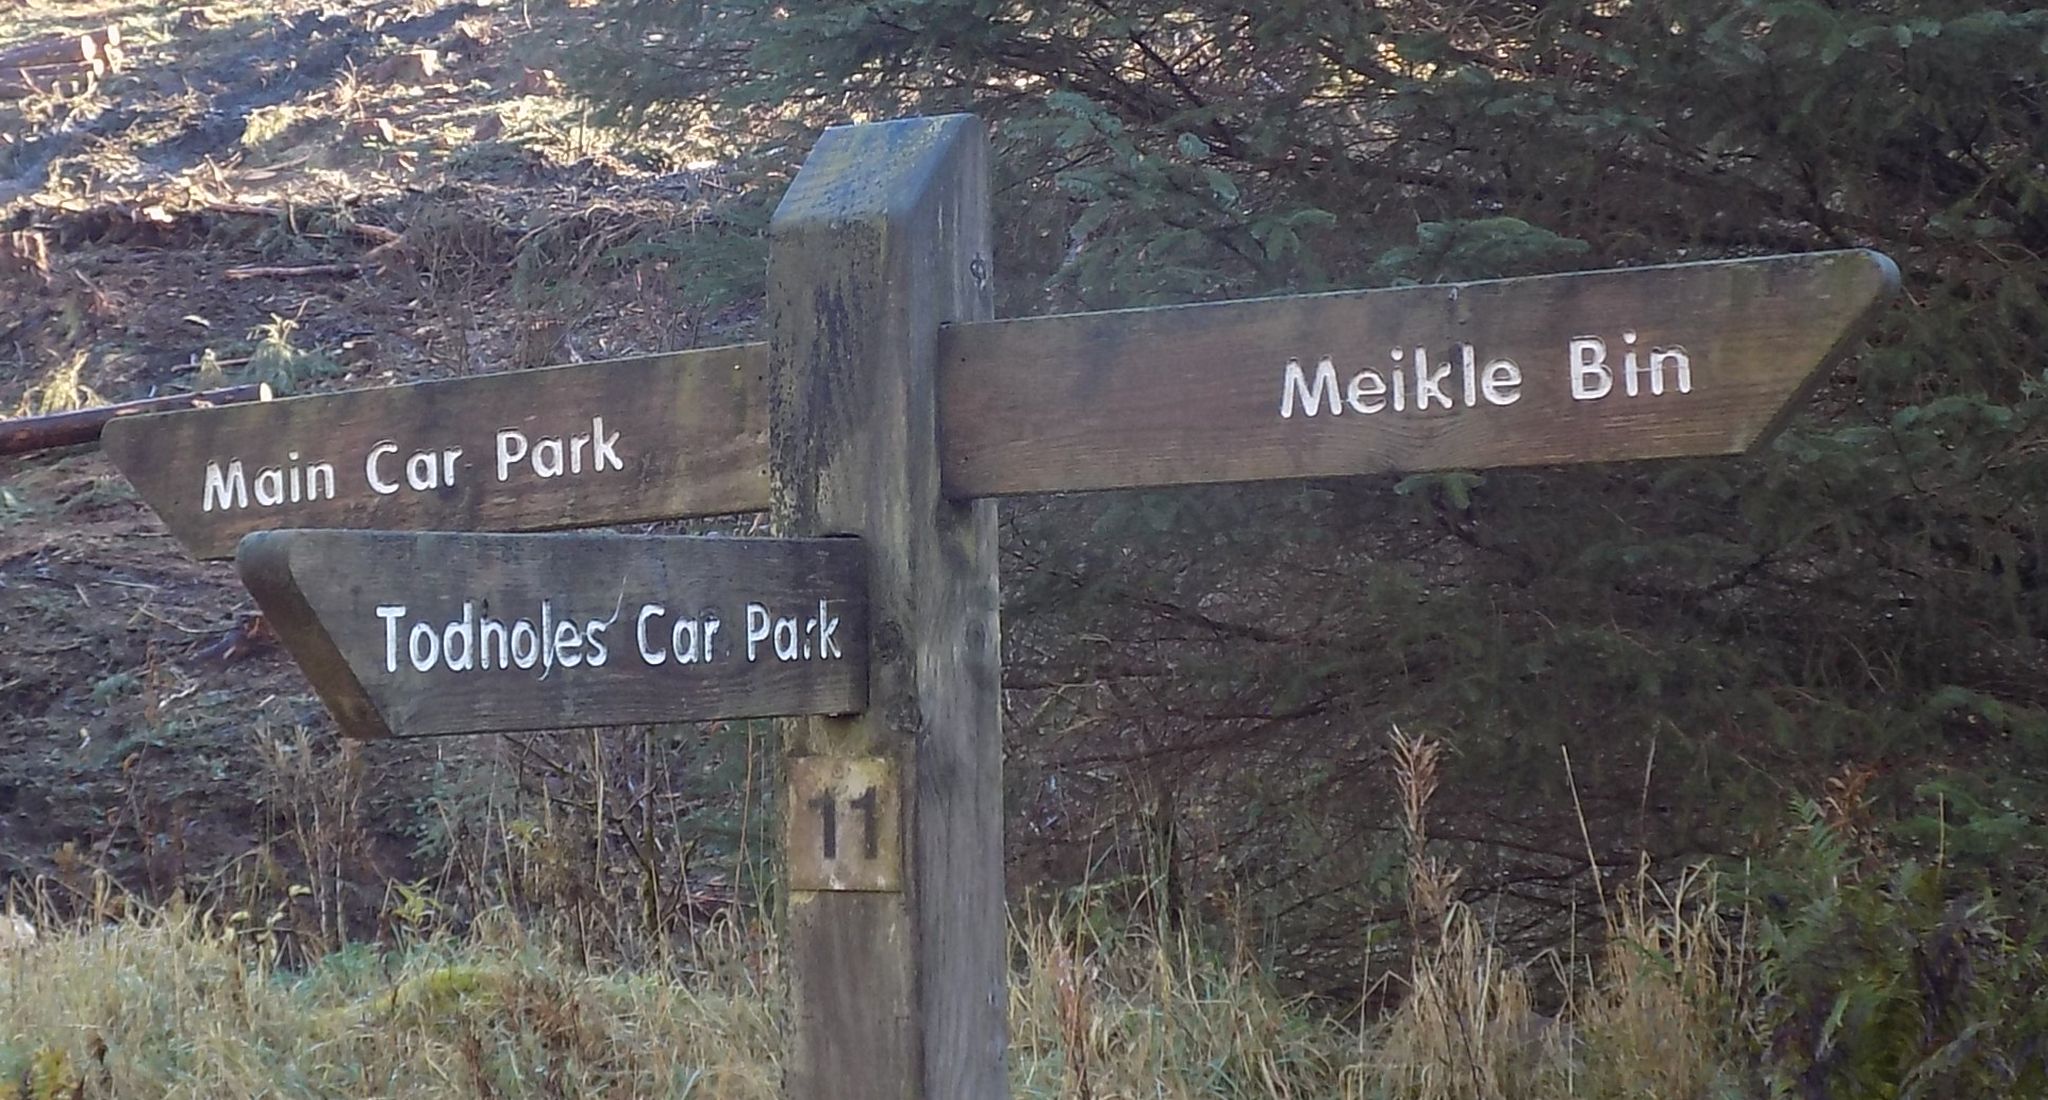 Signpost for Meikle Bin